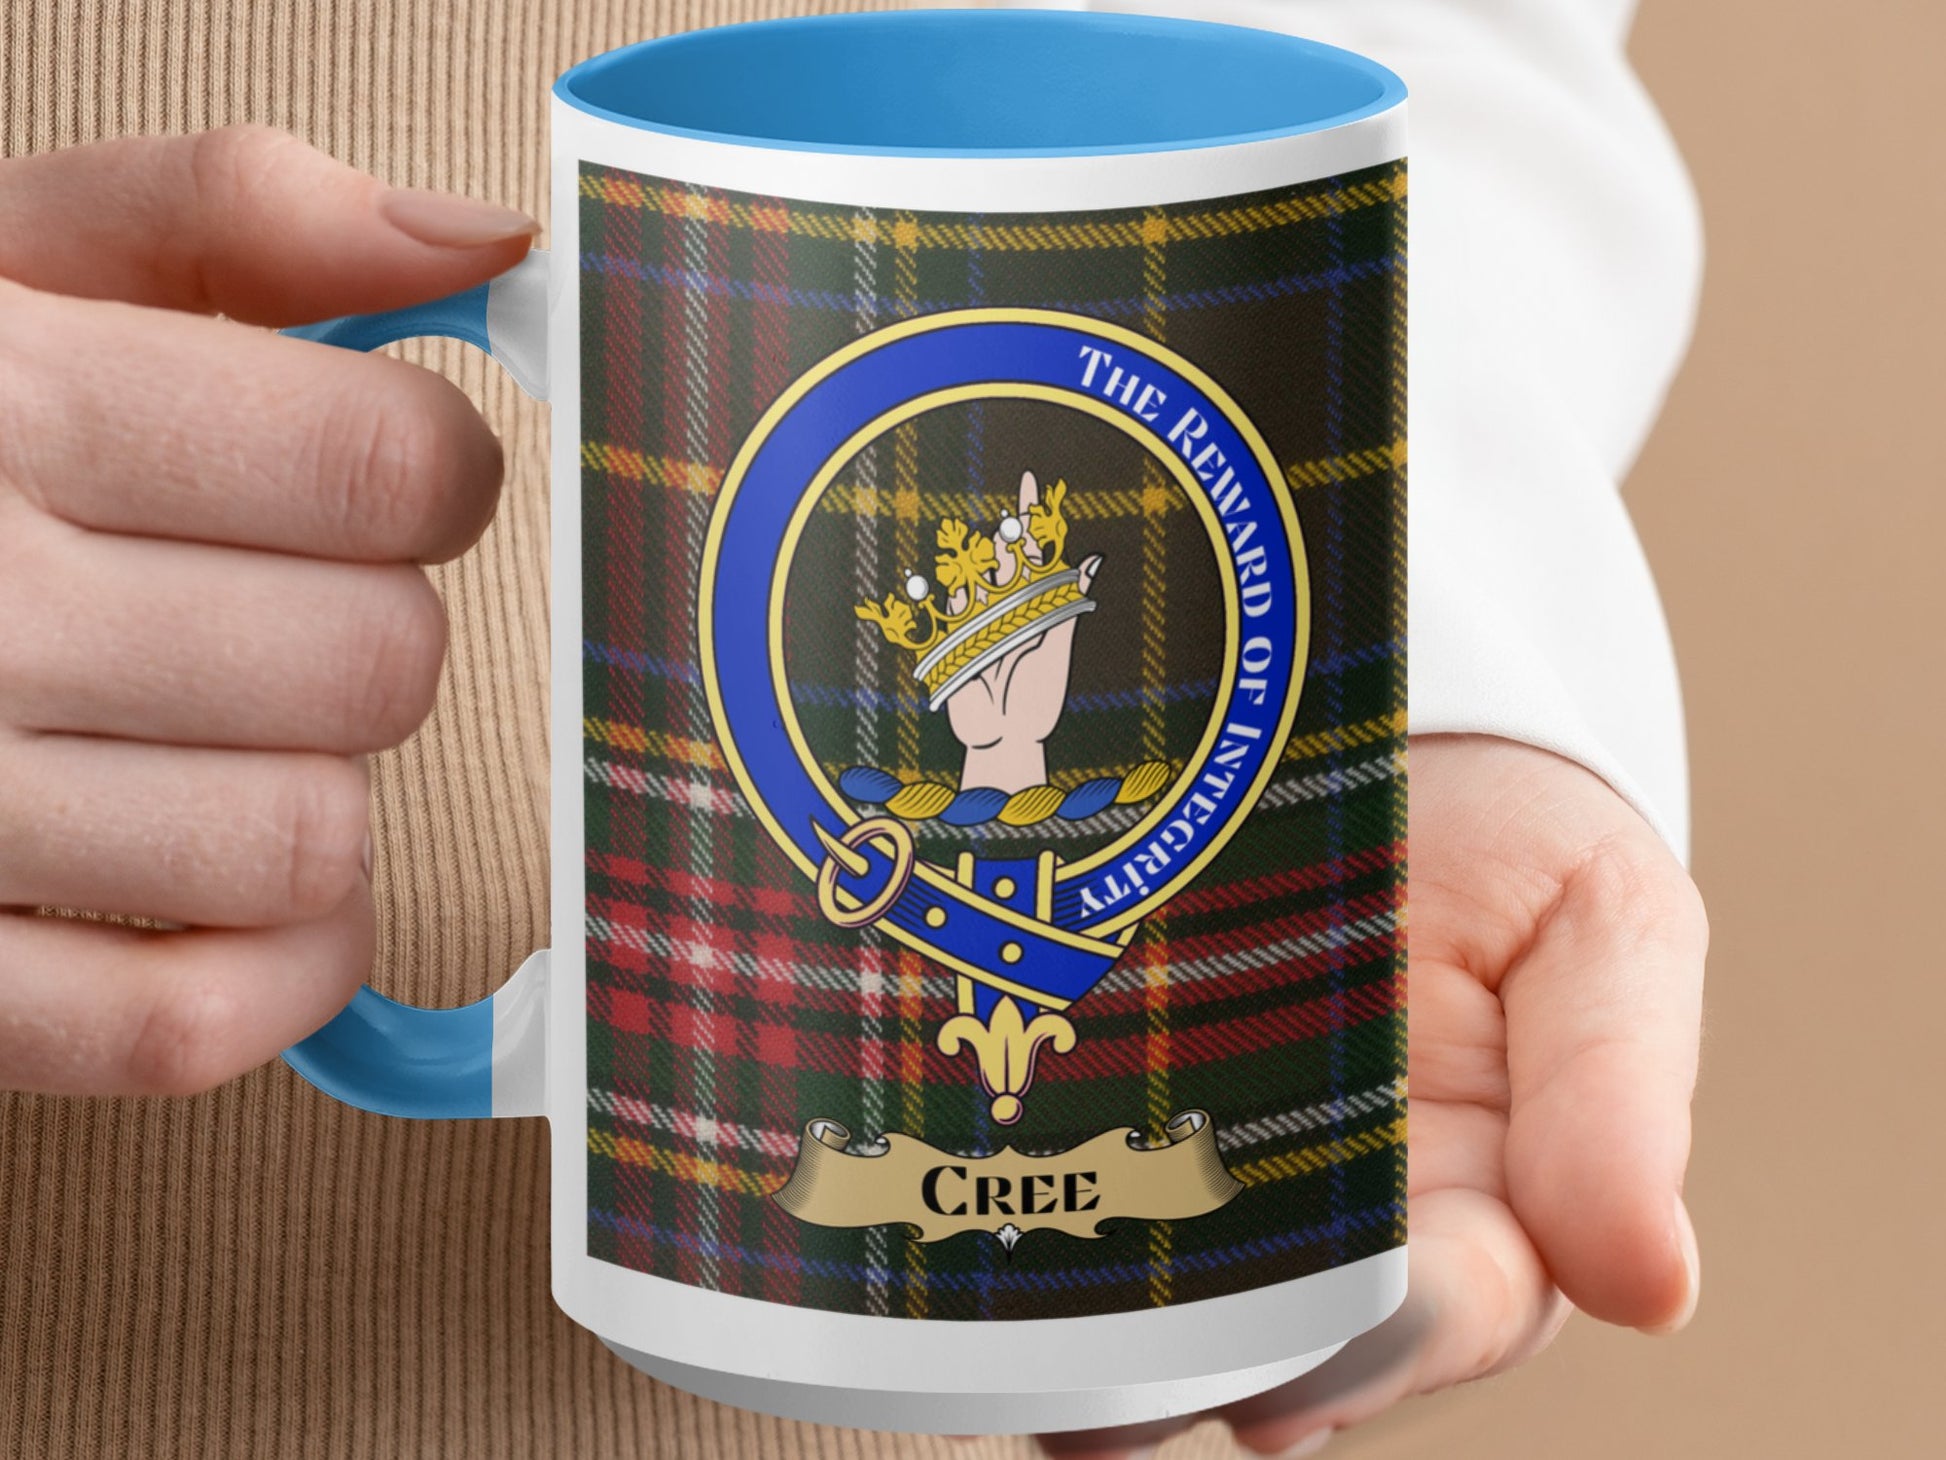 The Clan Cree Scottish Tartan Crest Emblem Mug - Living Stone Gifts